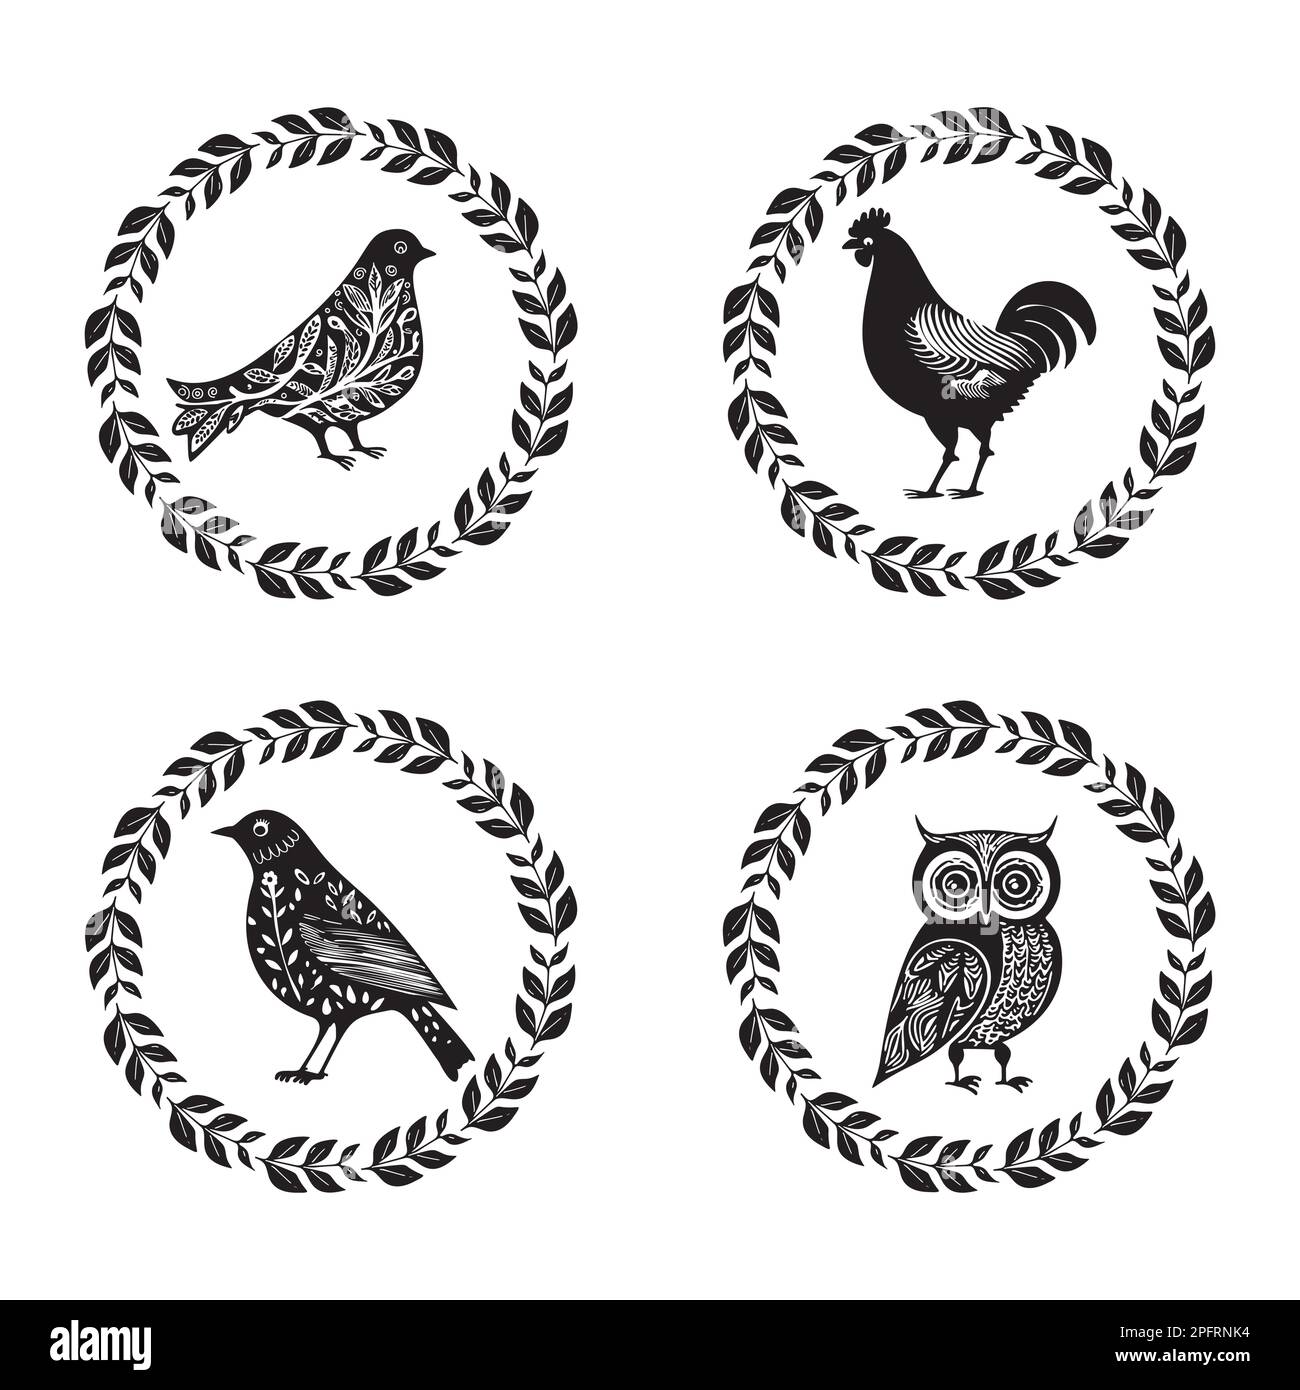 Cute bird vector icon. Low brow wildlife motif in scnadi style collection.  Stock Vector